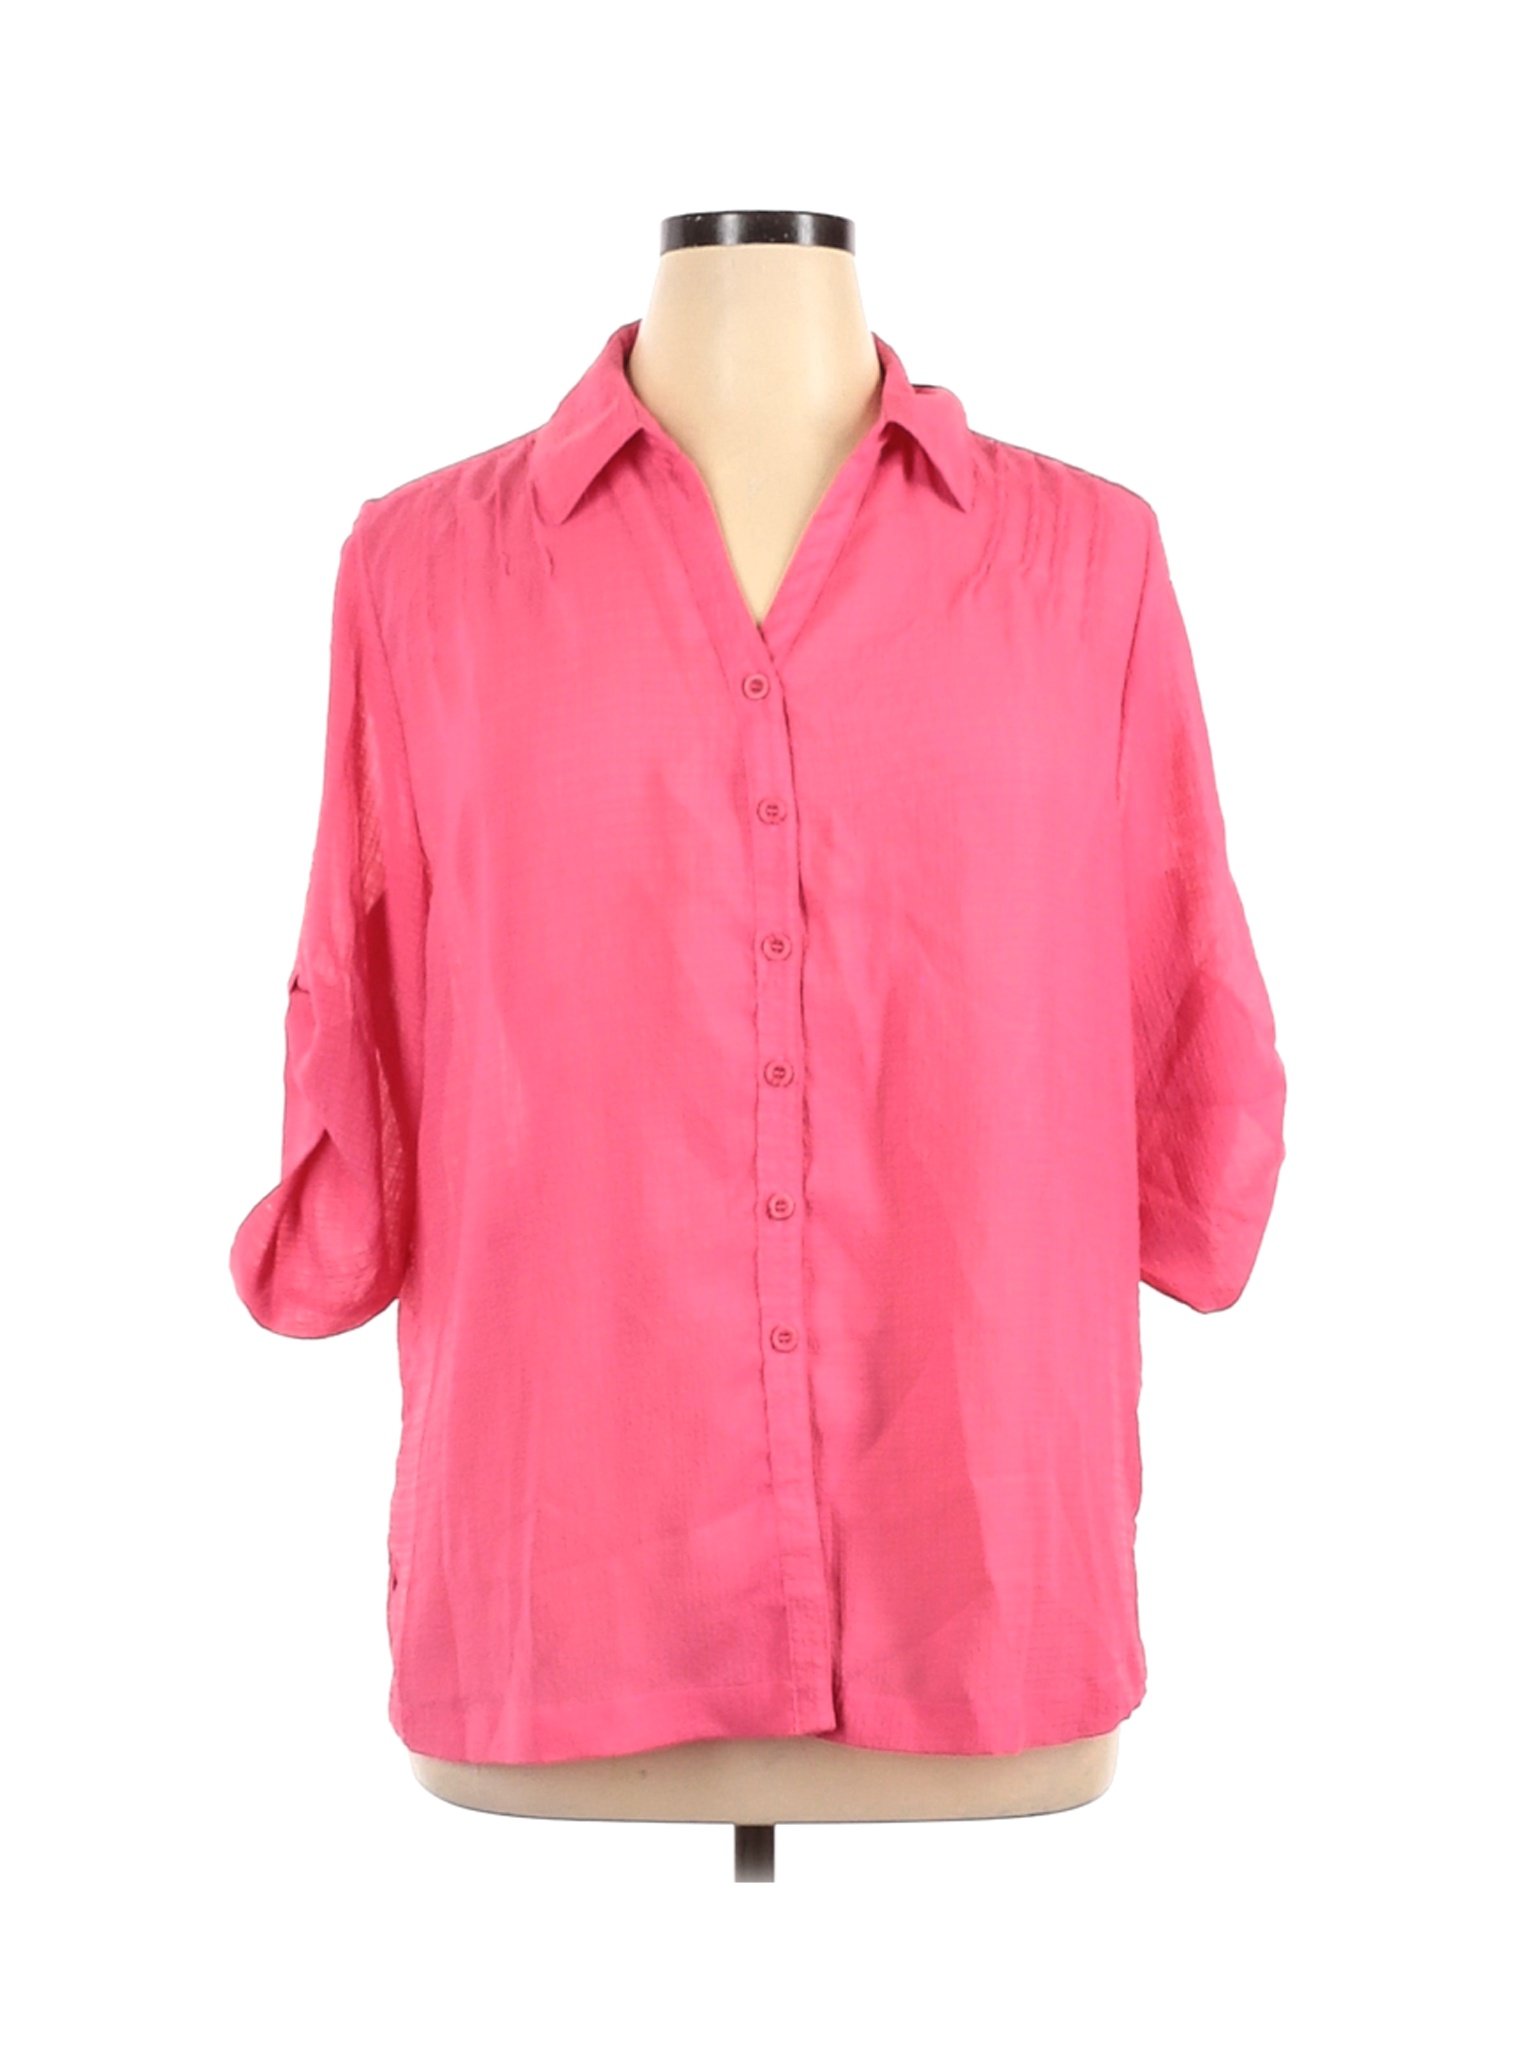 Koret Women Pink Long Sleeve Blouse XL | eBay